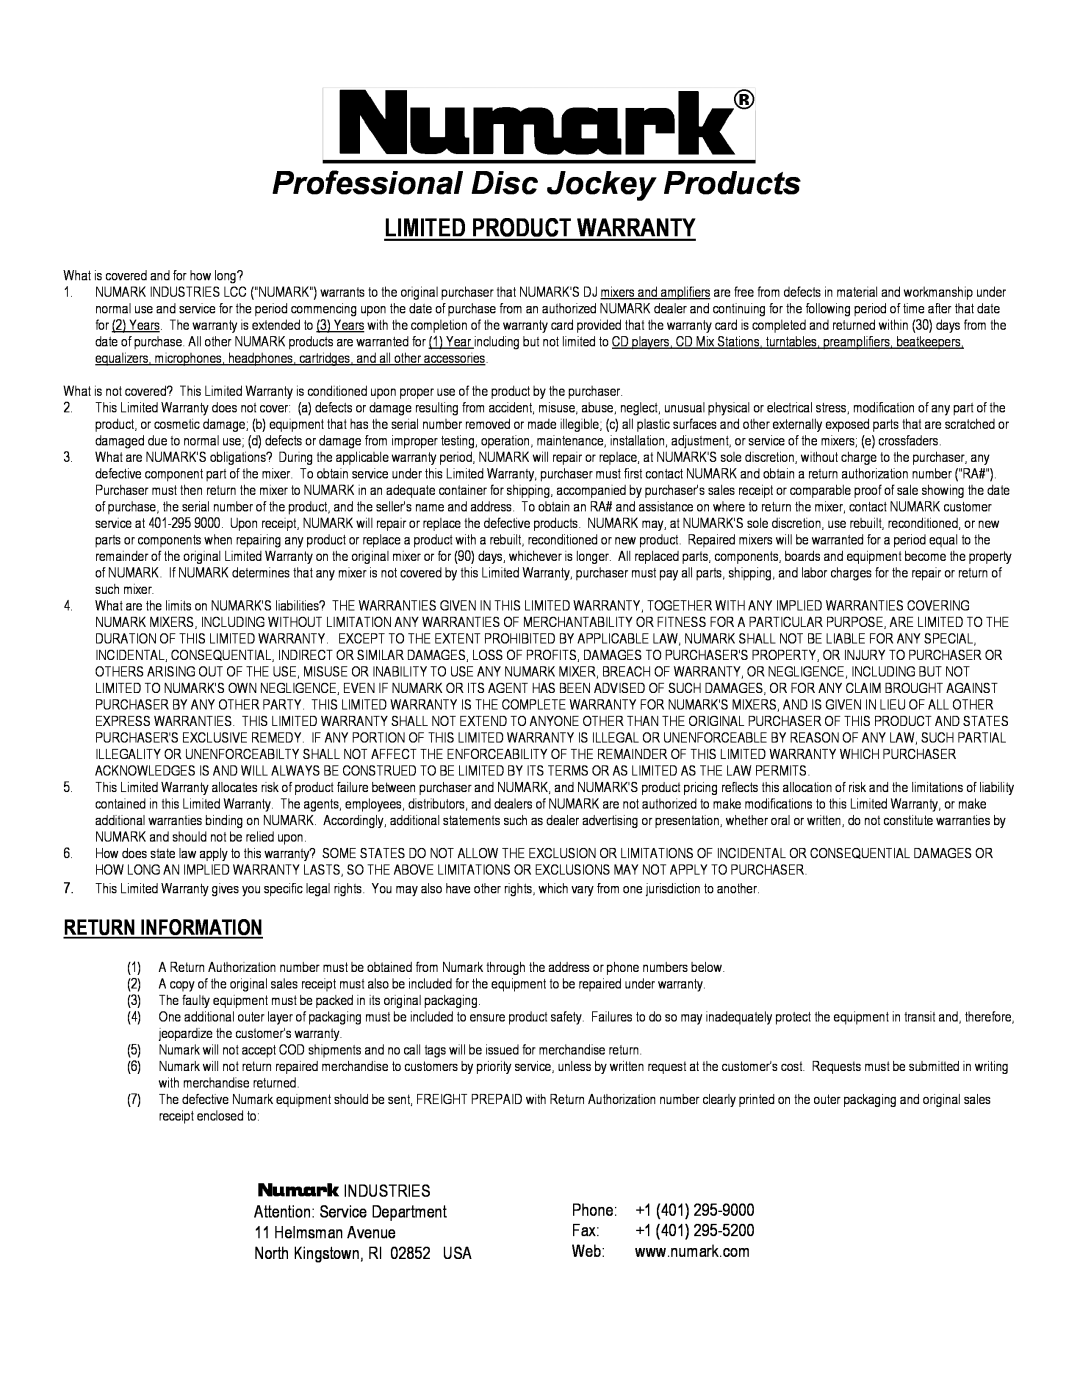 Numark Industries PRO TT-2 owner manual Professional Disc Jockey Products, Limited Product Warranty, Return Information 